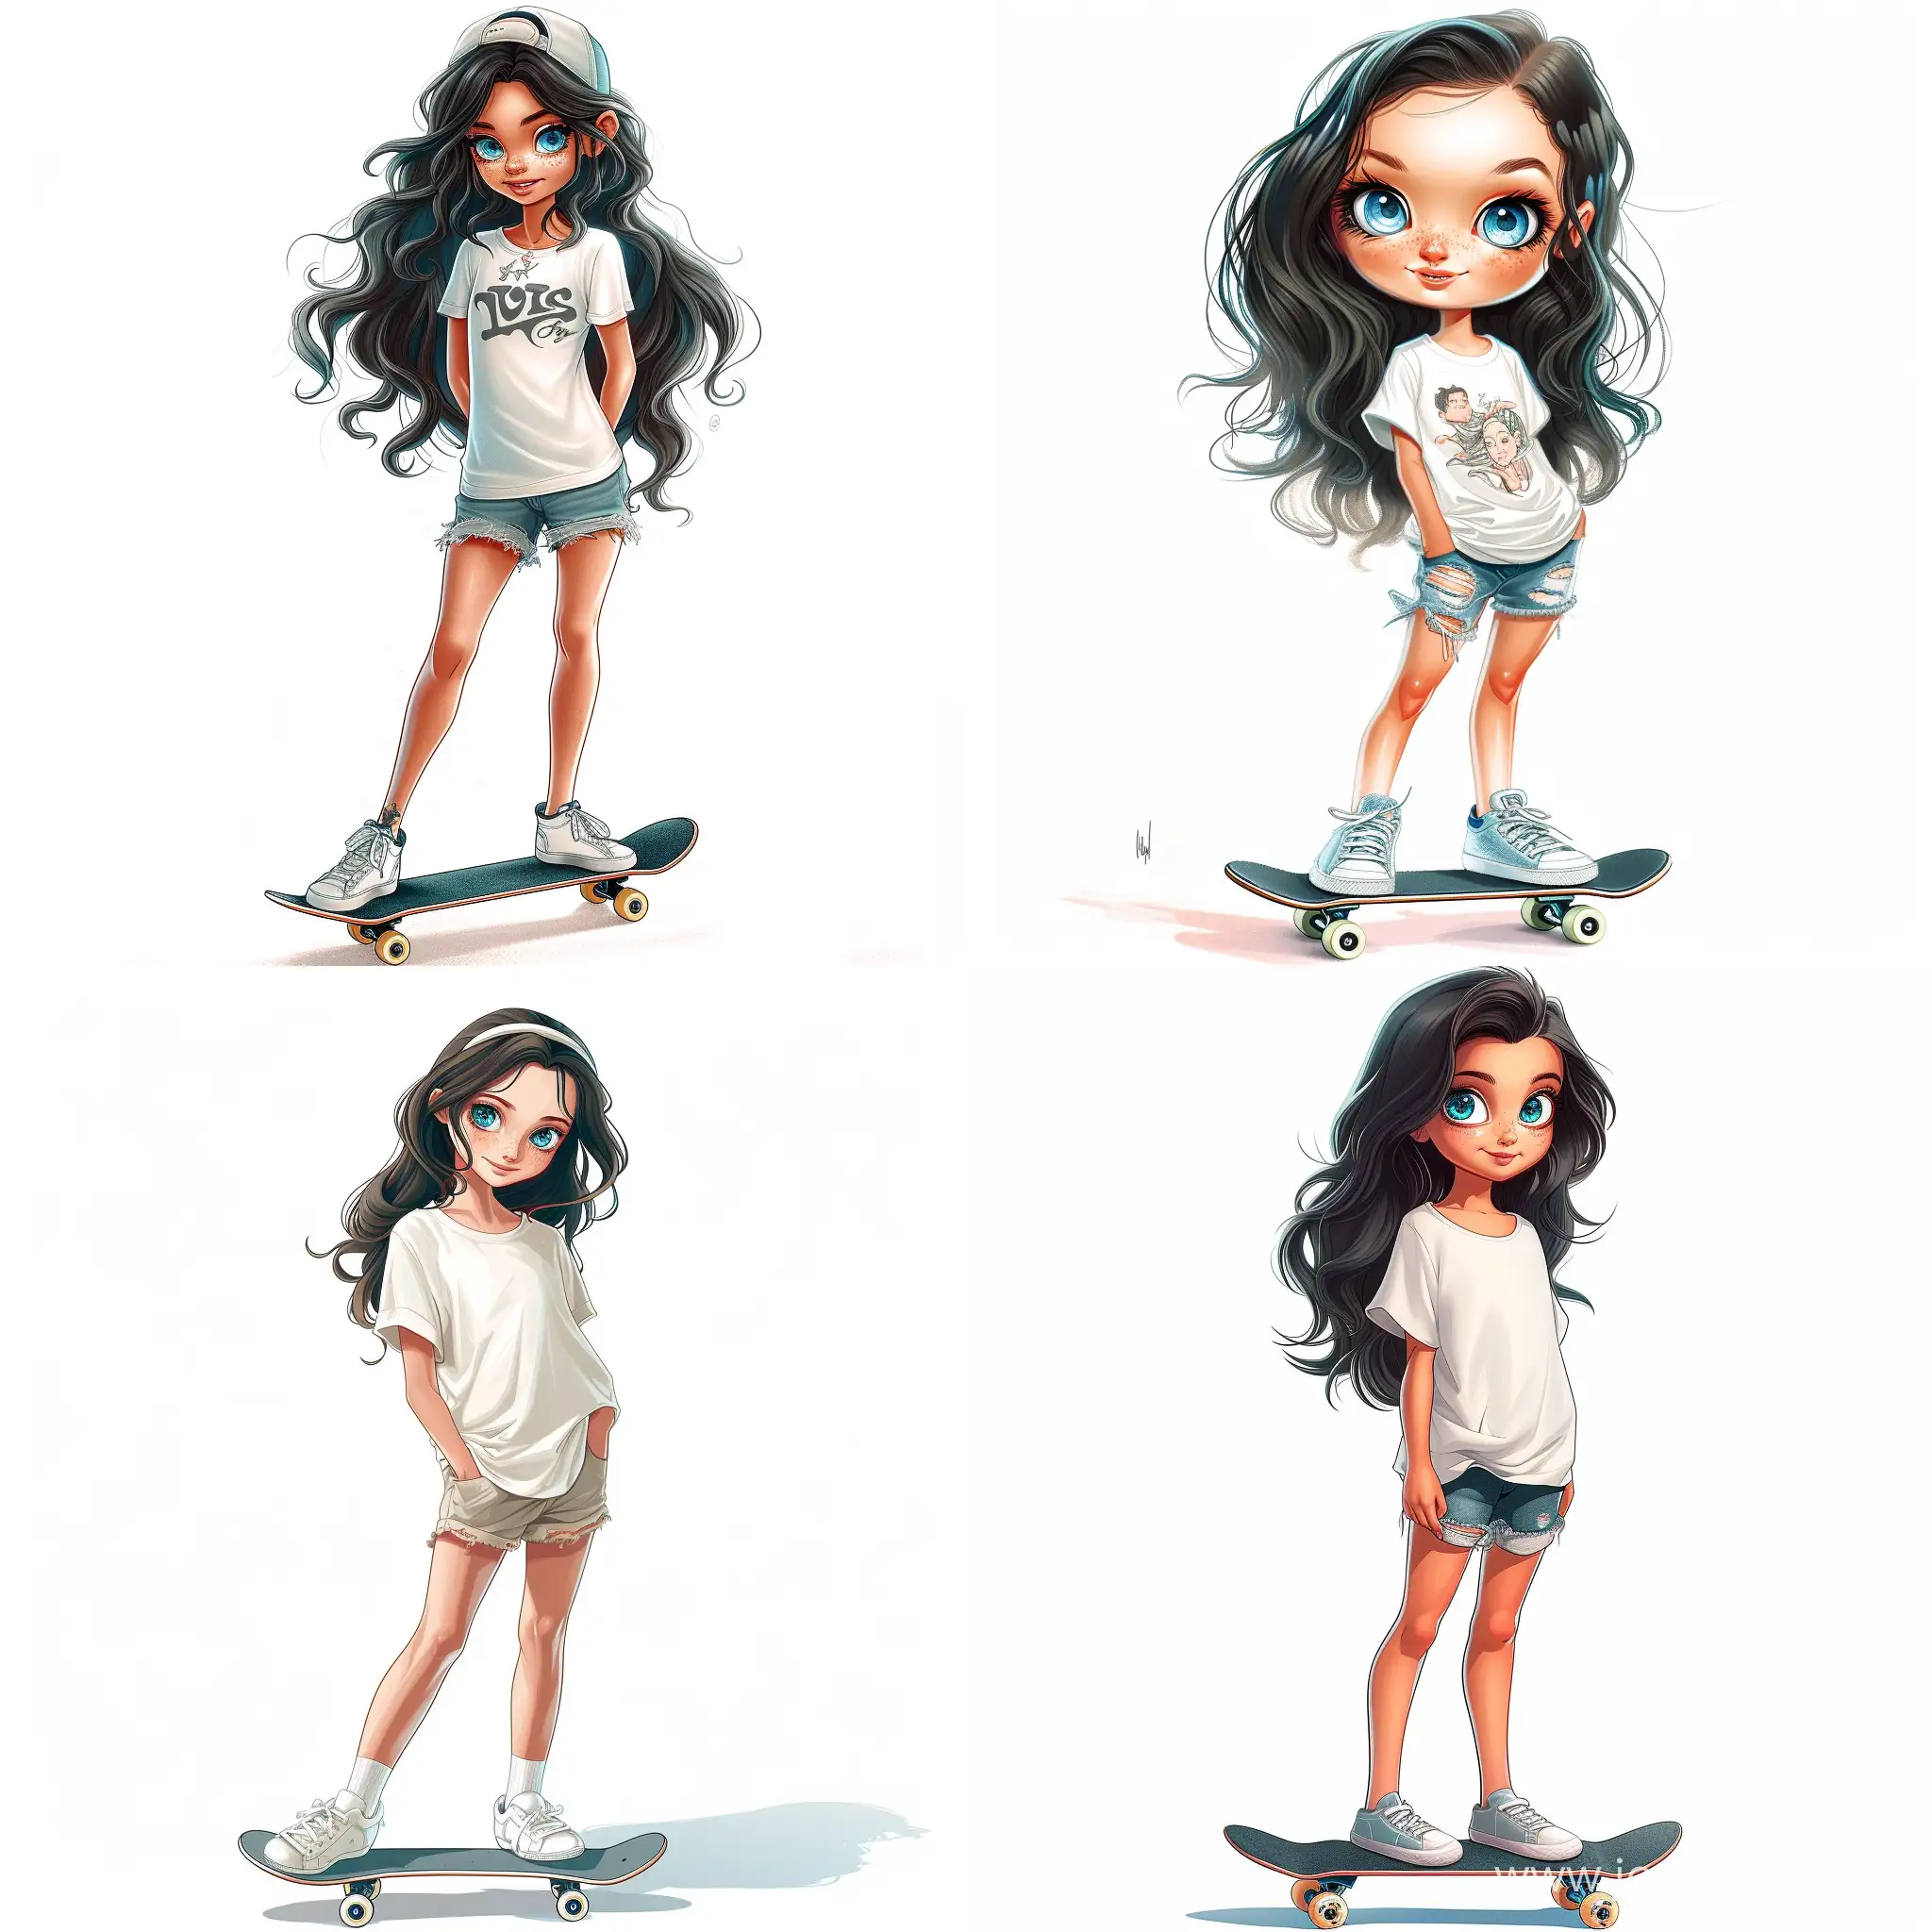 Stylish-Teenage-Girl-Skateboarding-in-Summer-HighQuality-Cartoon-Art